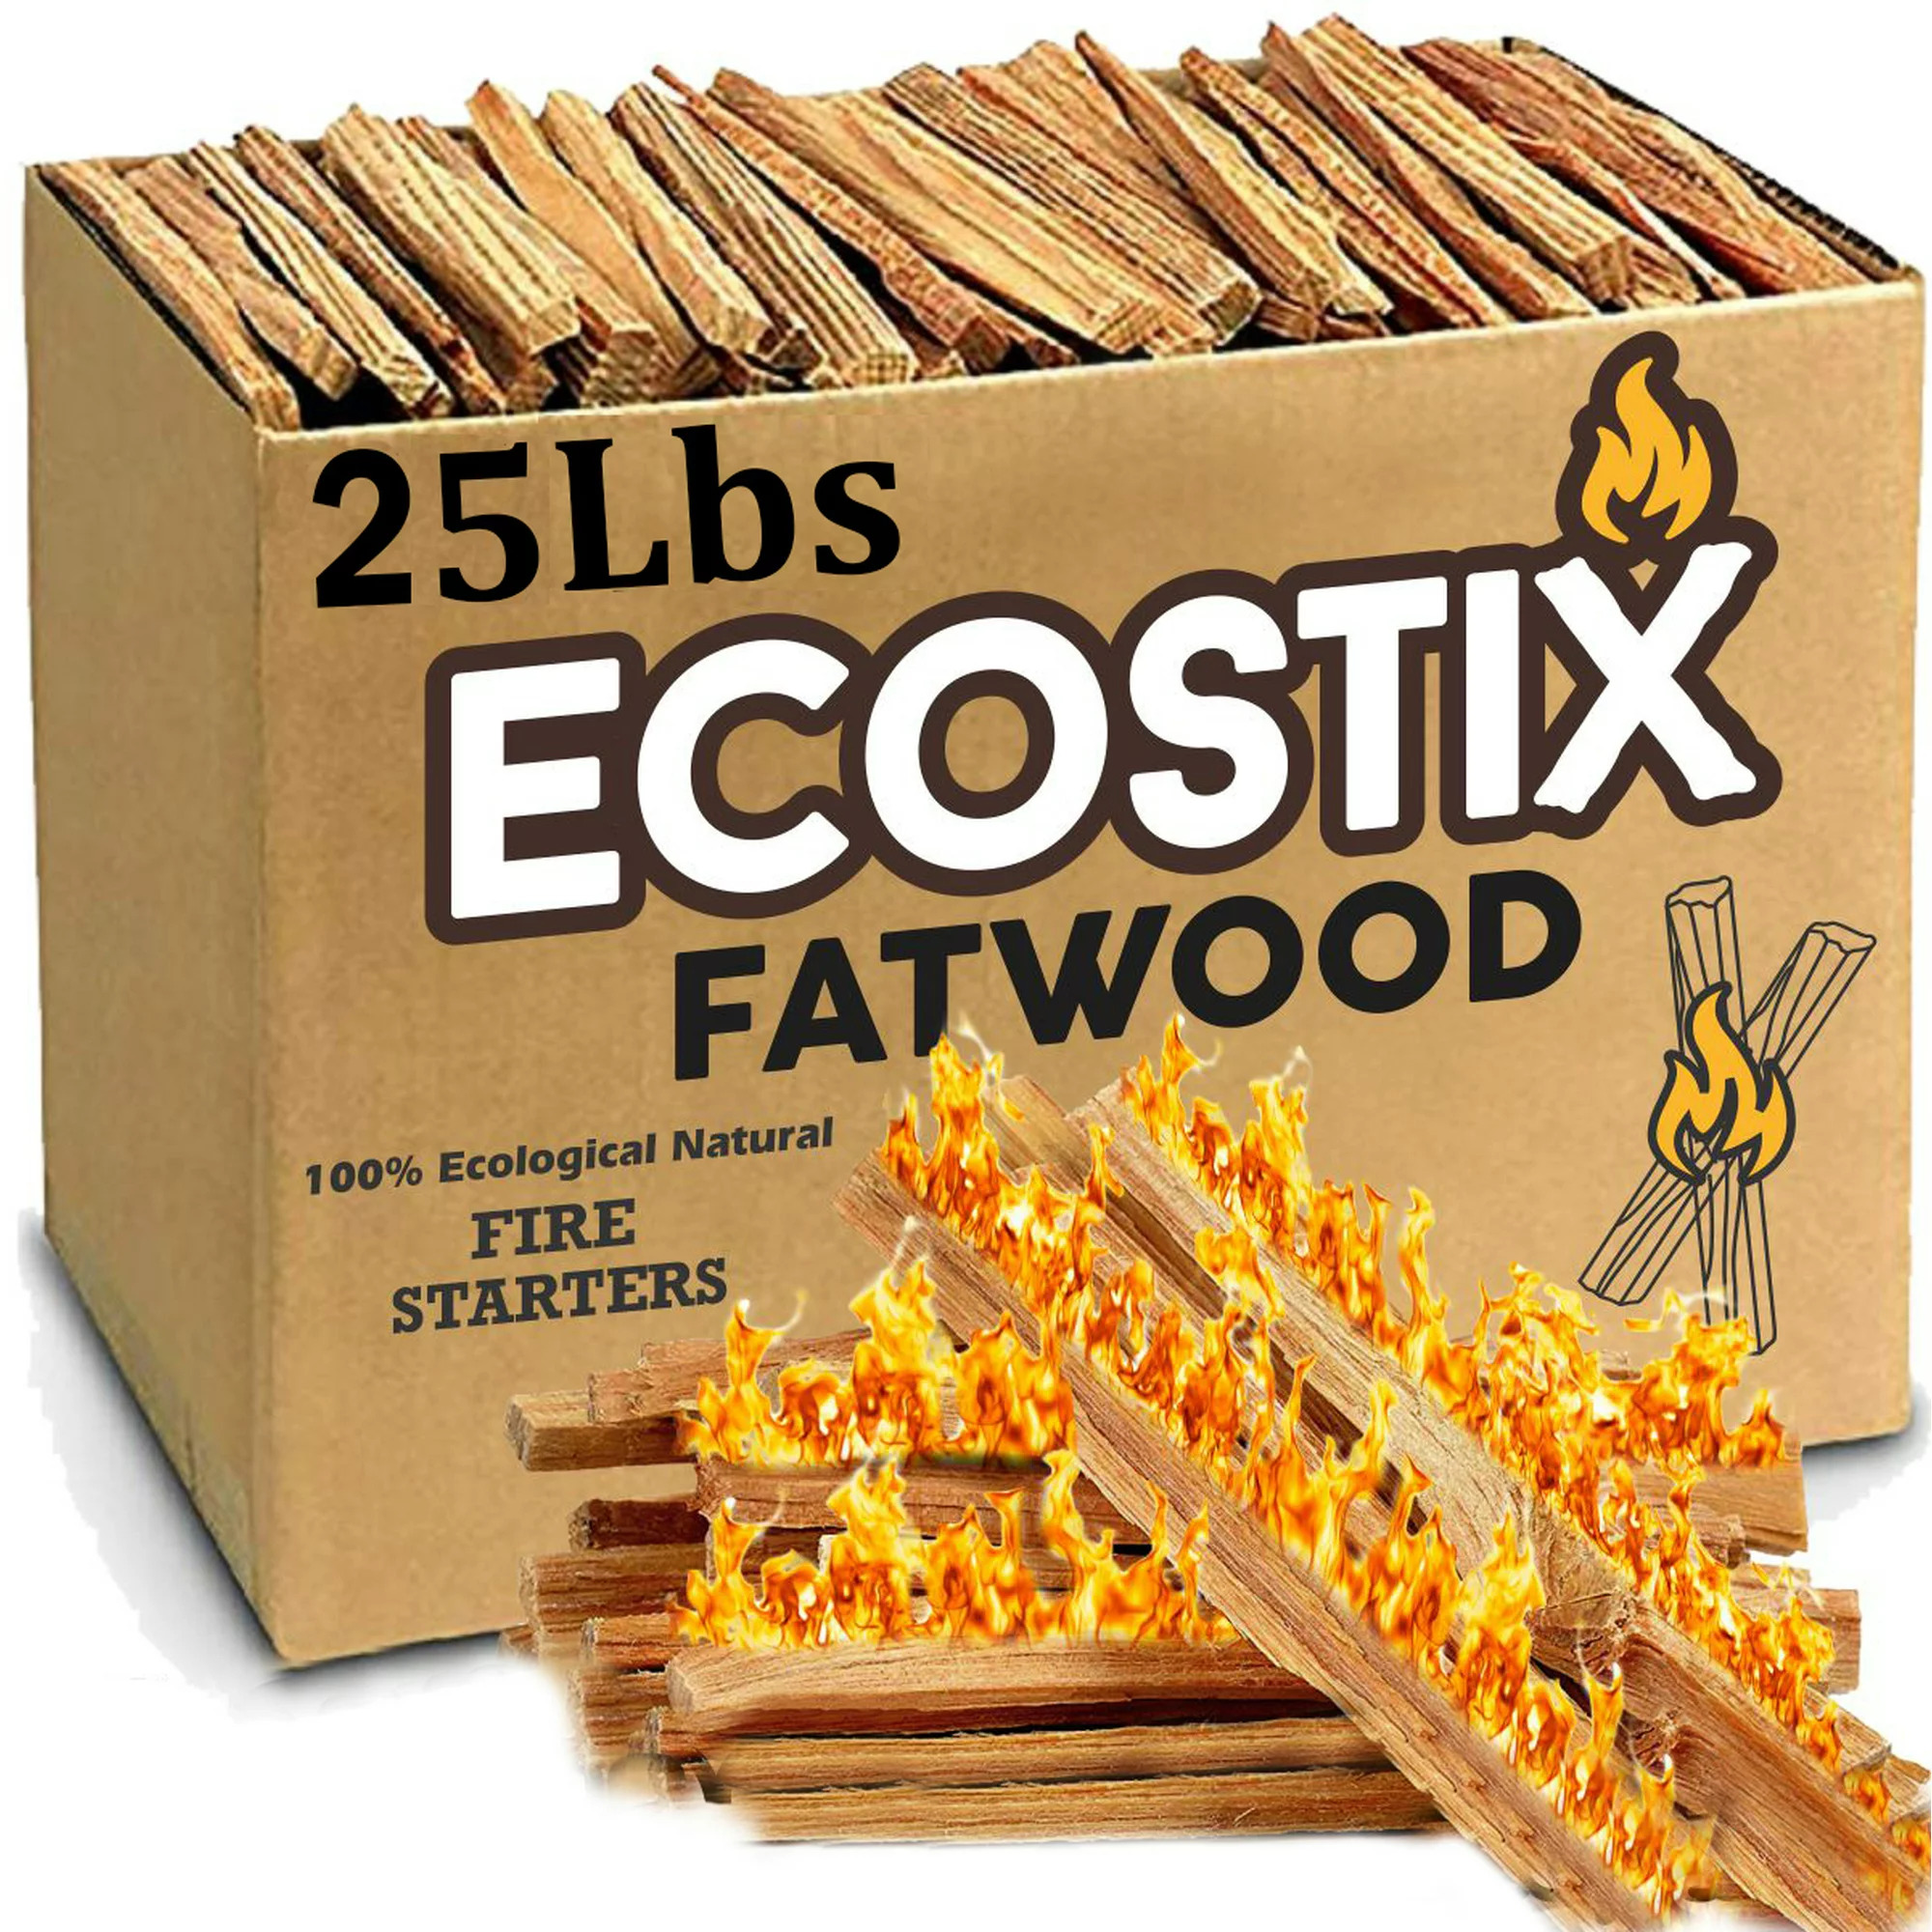 Eco-Stix Fatwood fire starters